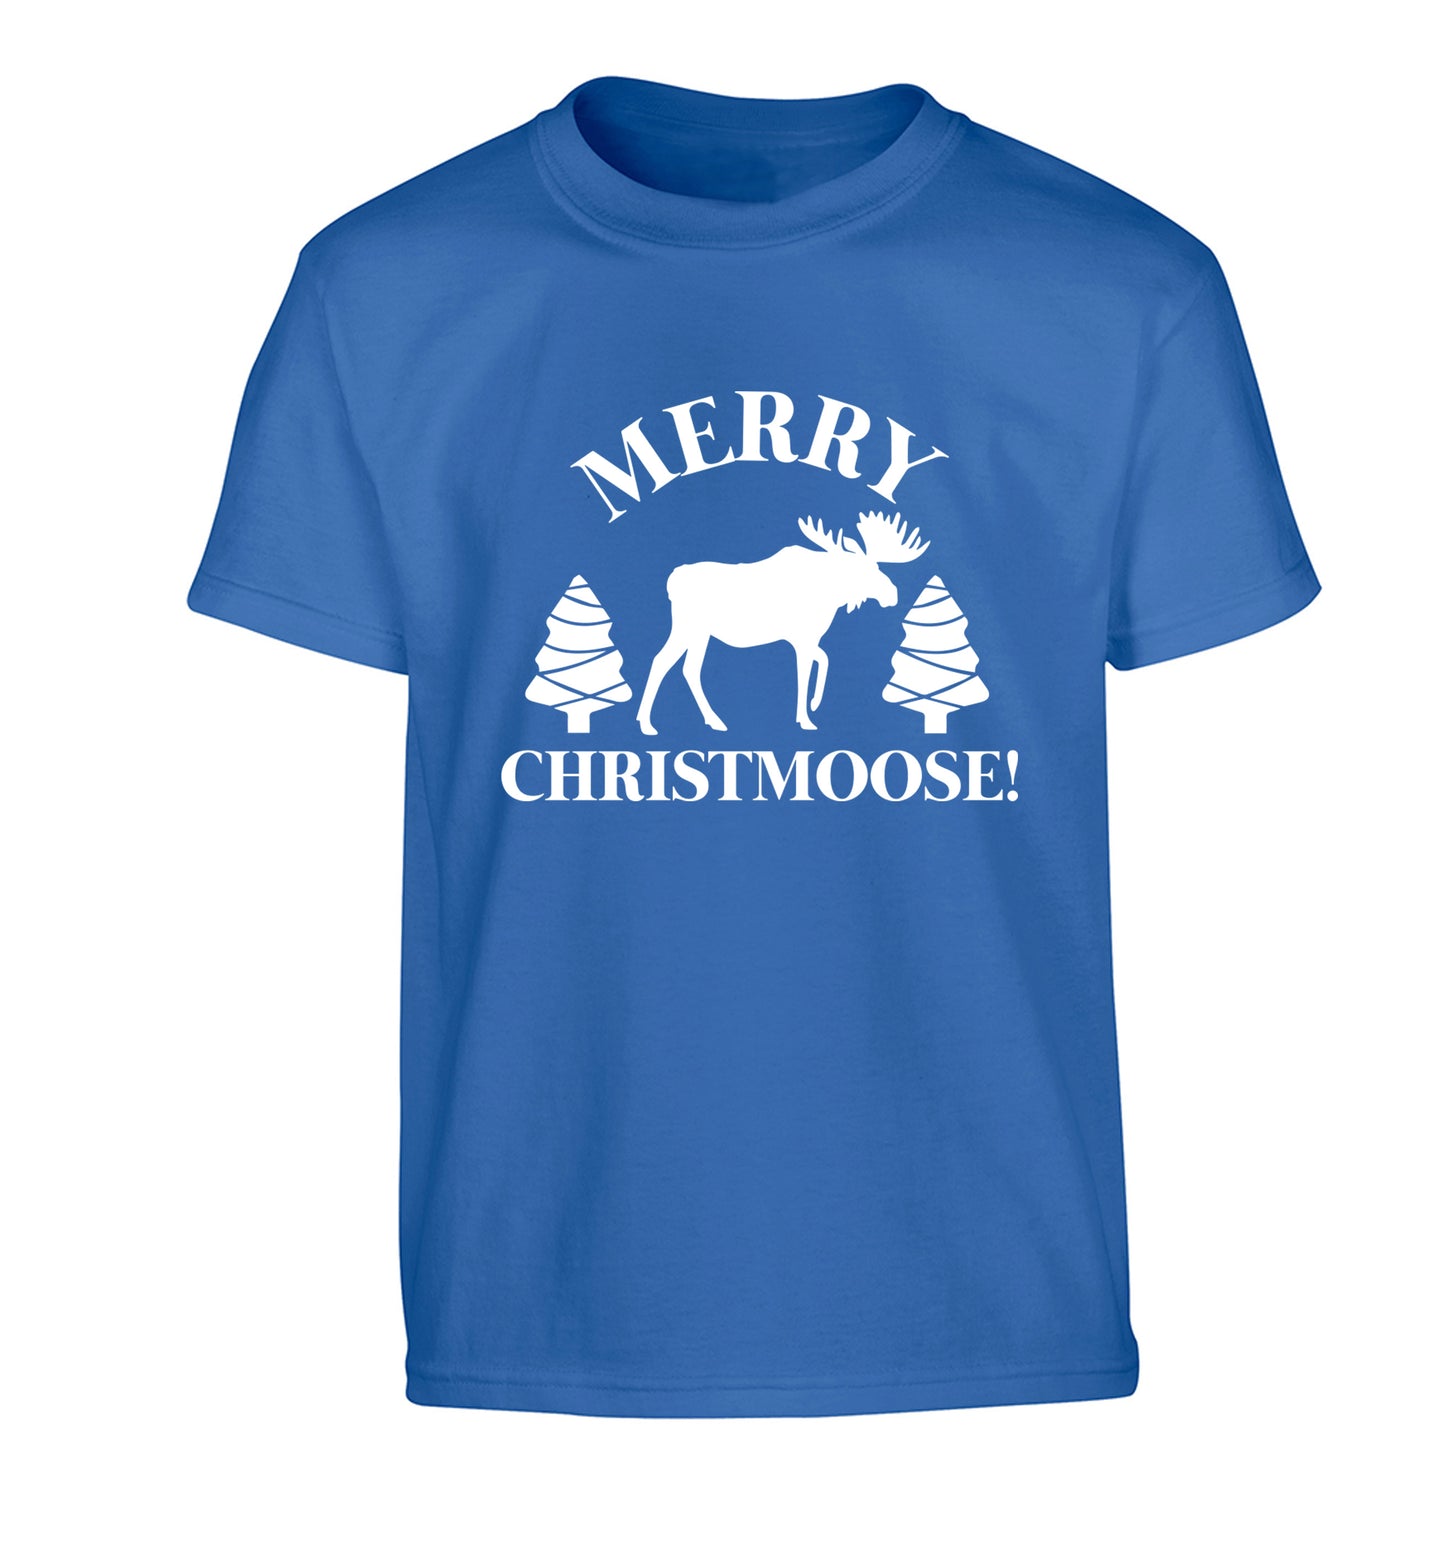 Merry Christmoose Children's blue Tshirt 12-14 Years